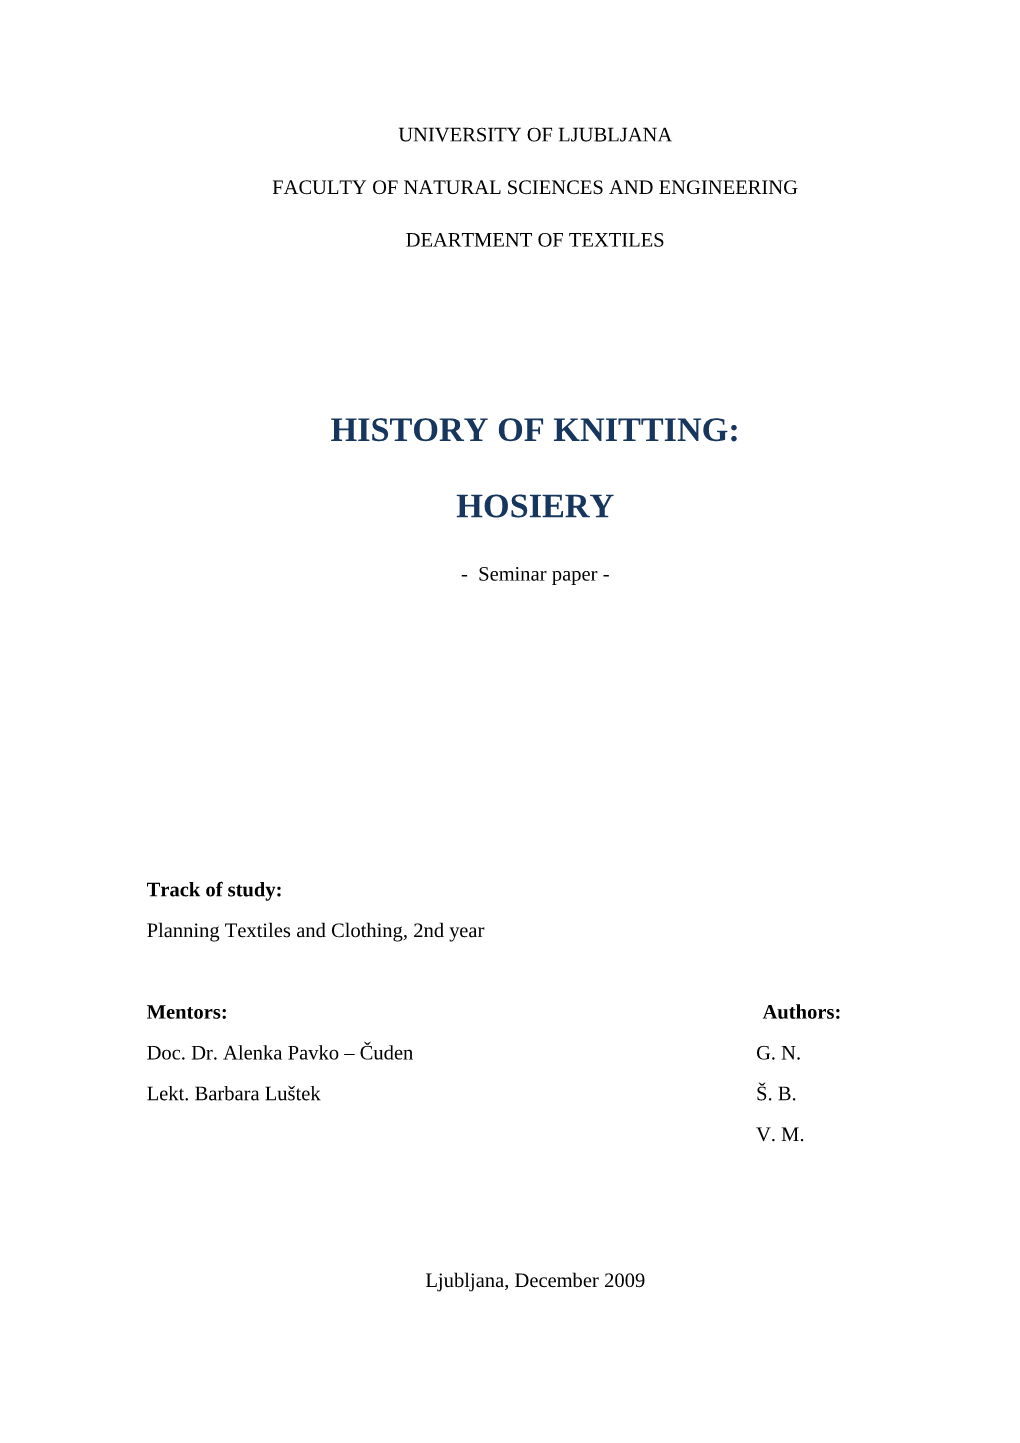 History of Knitting: Hosiery